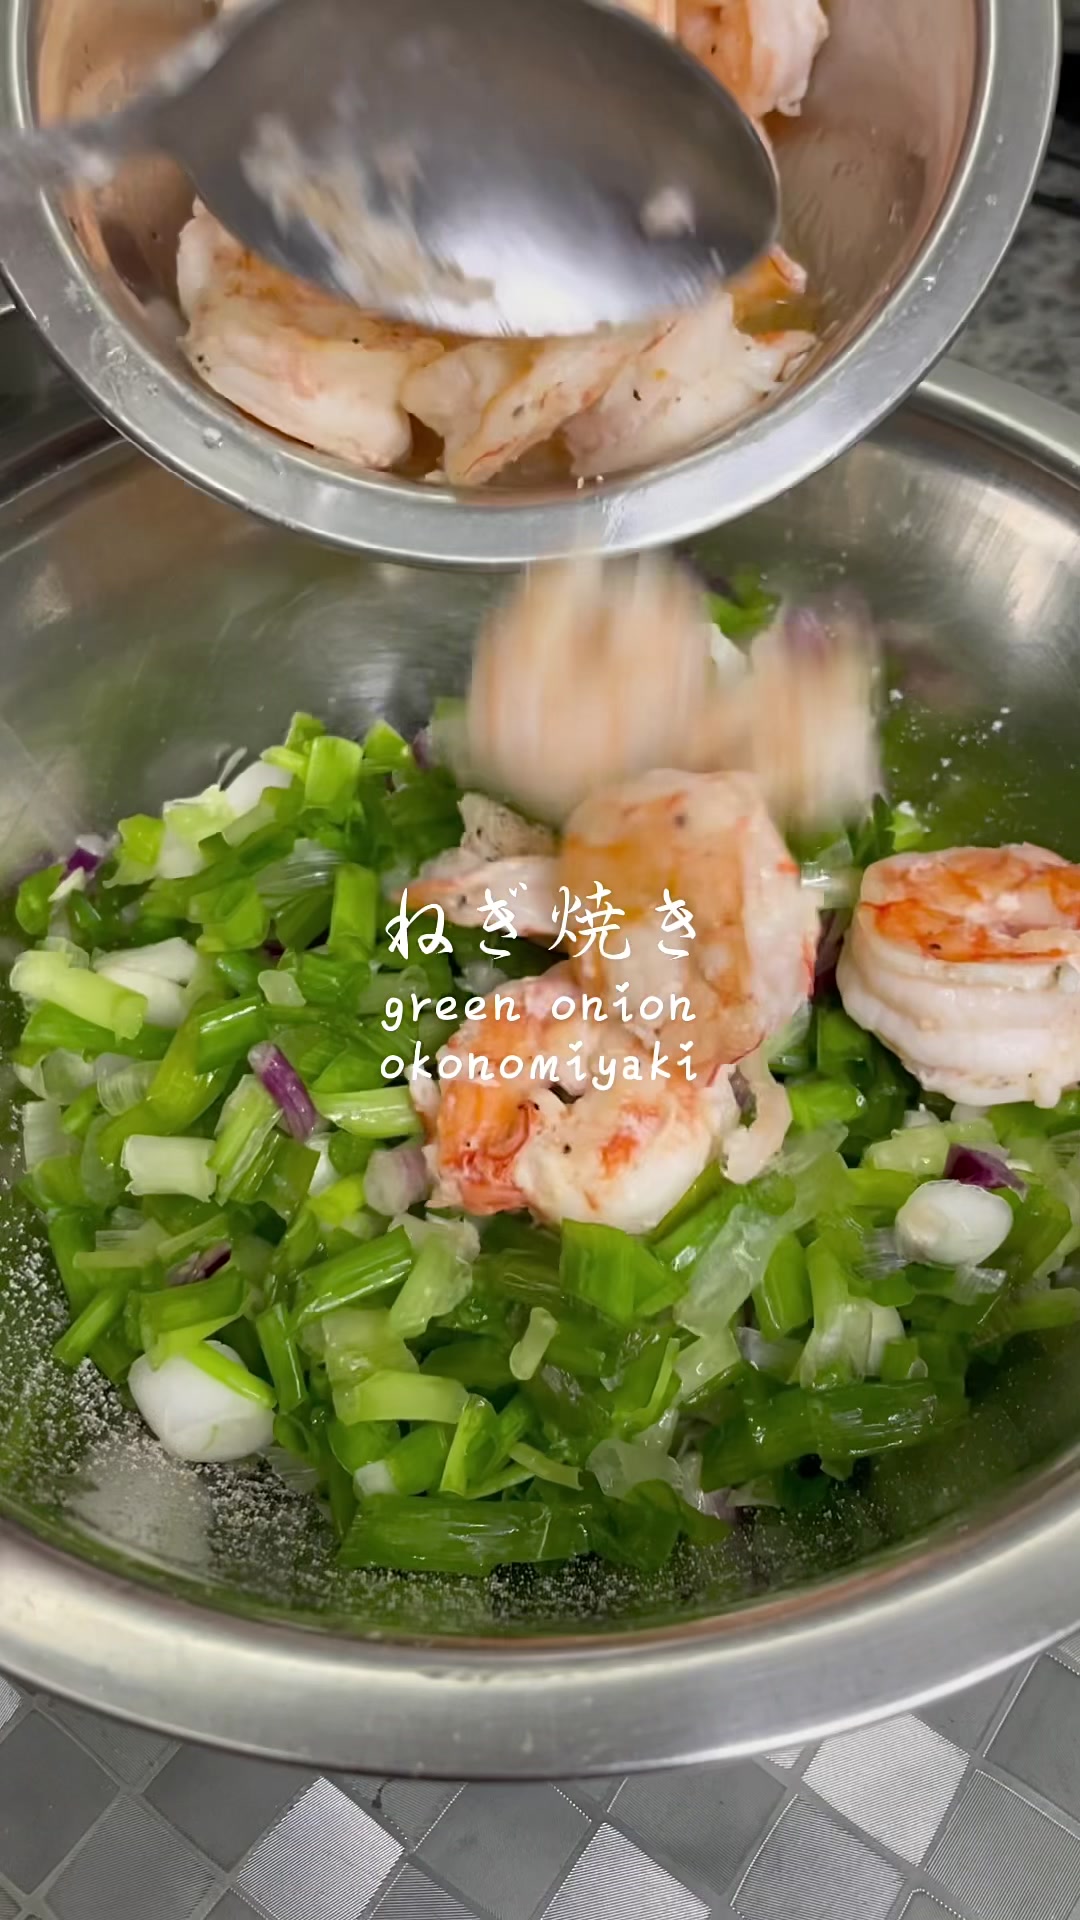 @My mum makes green onion okonomiyaki ? AKA, negiyaki! Needle...